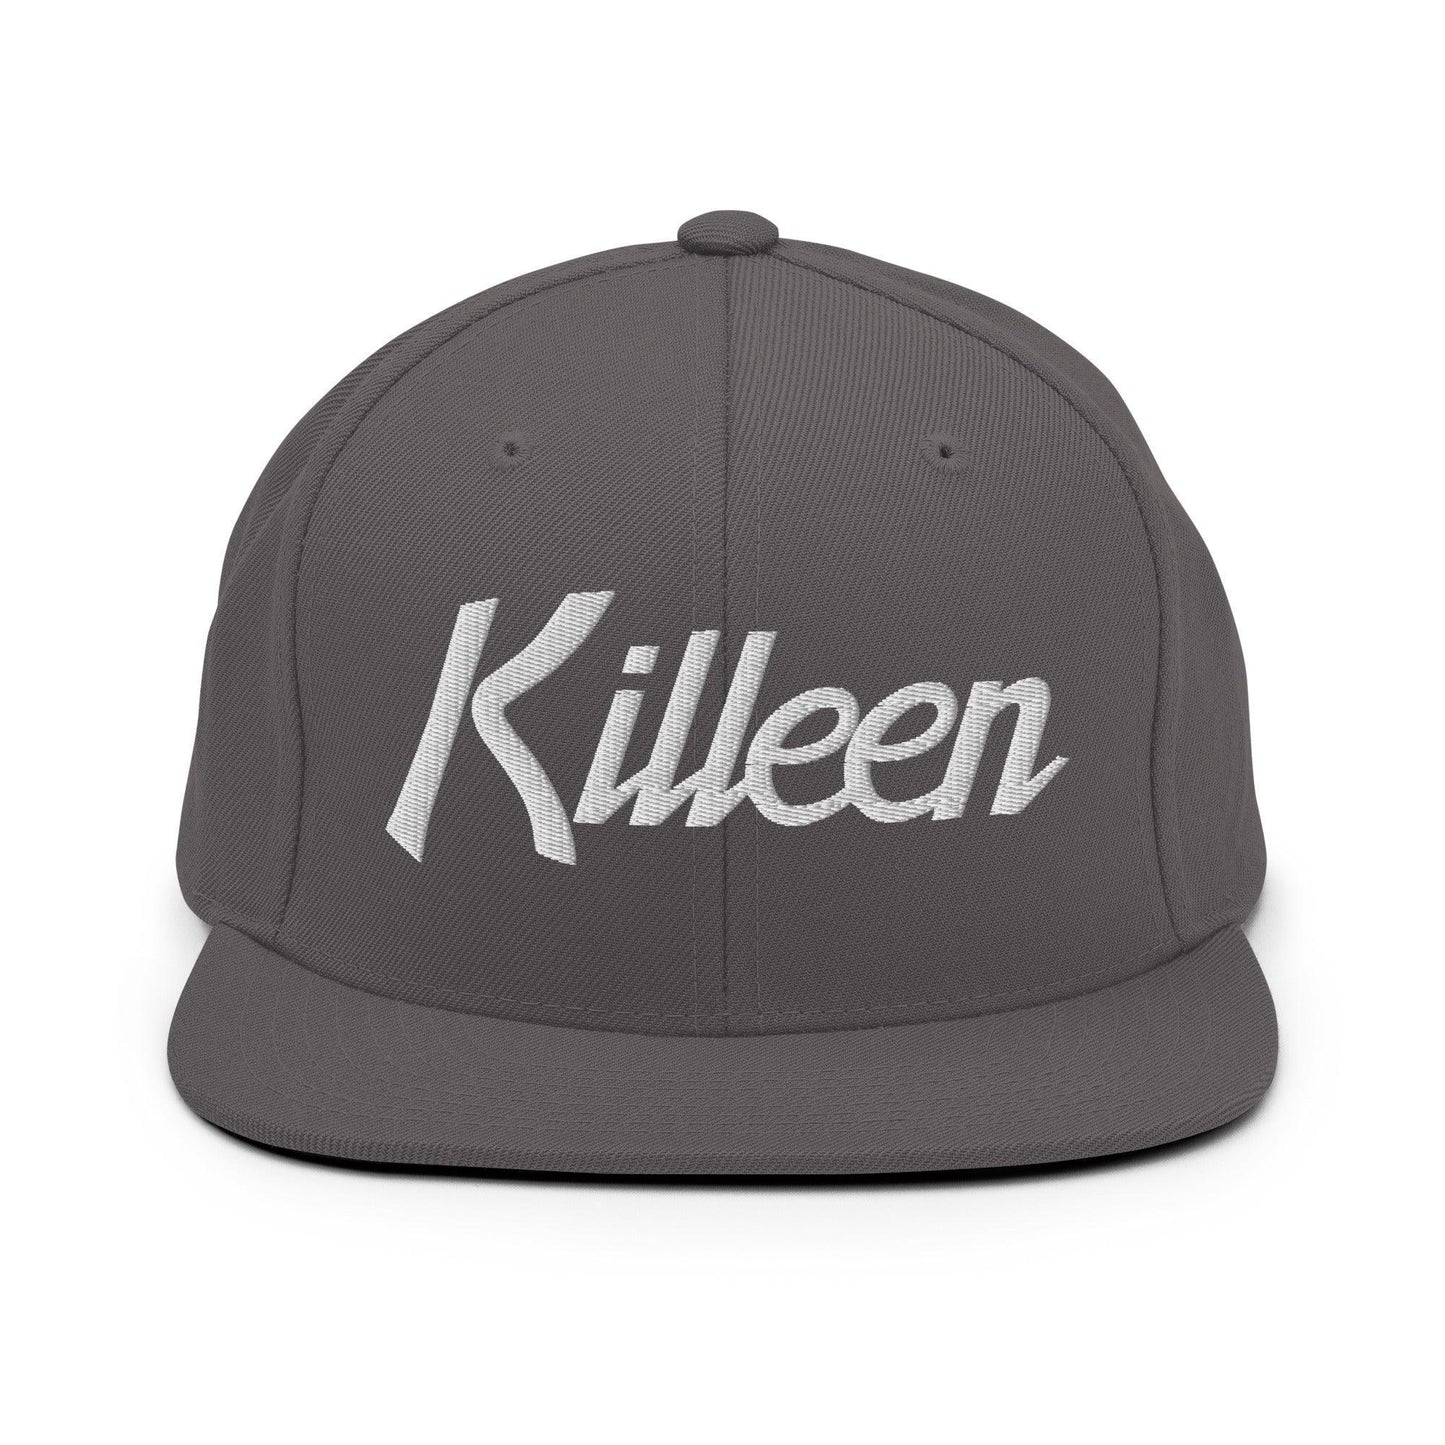 Killeen Script Snapback Hat Dark Grey